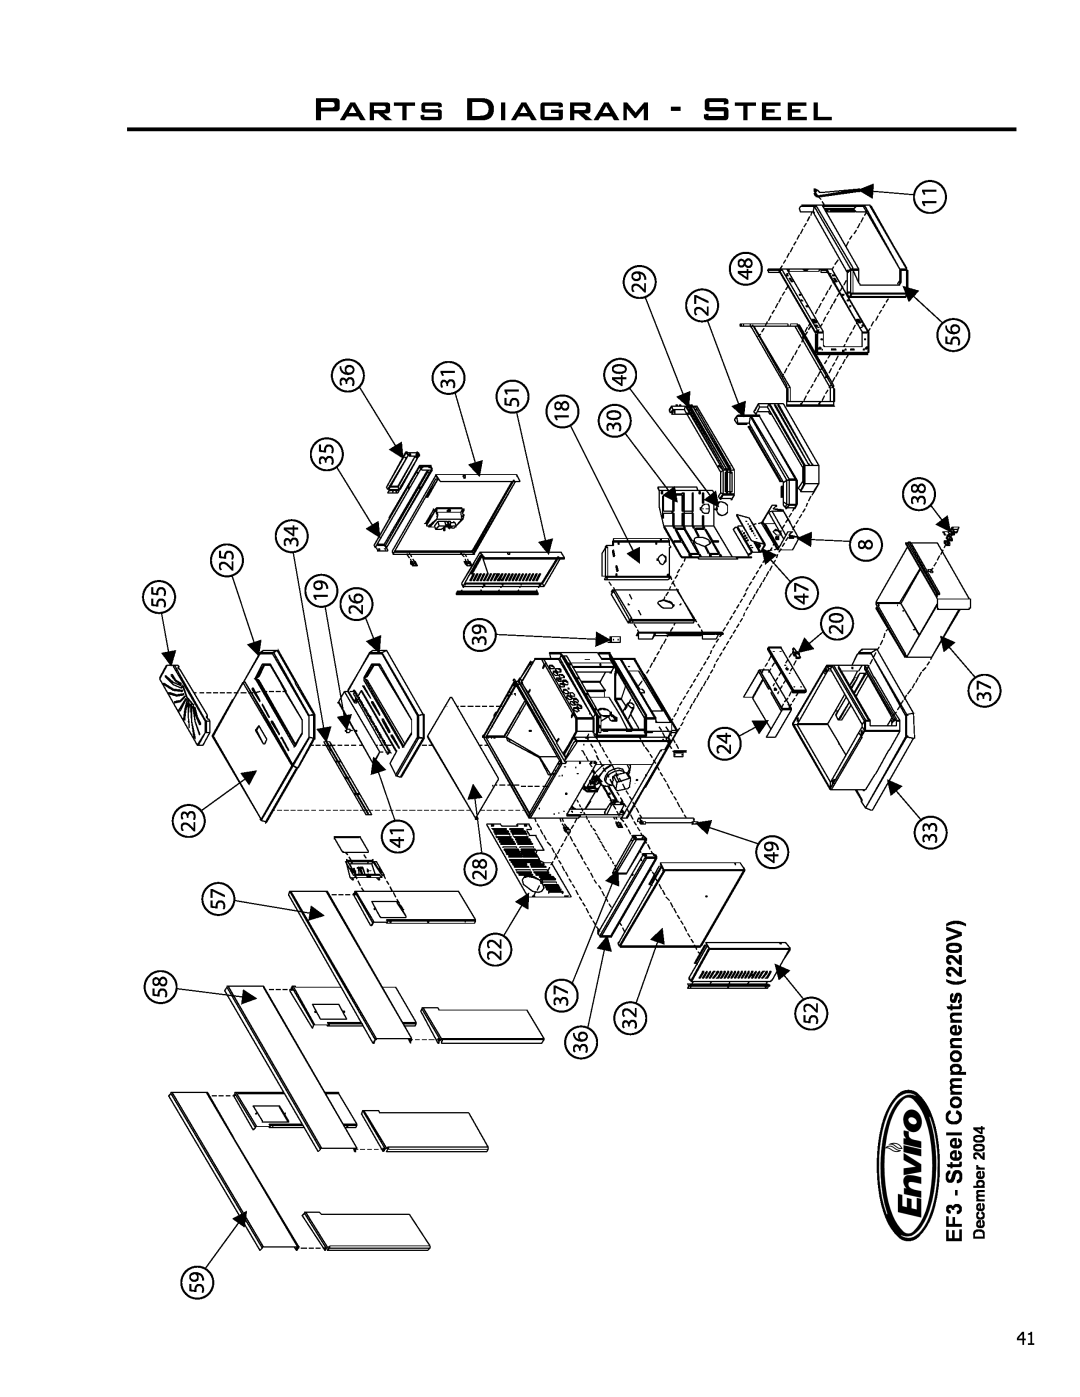 Enviro owner manual Parts, Diagram - Steel, EF3 - Steel Components, December 